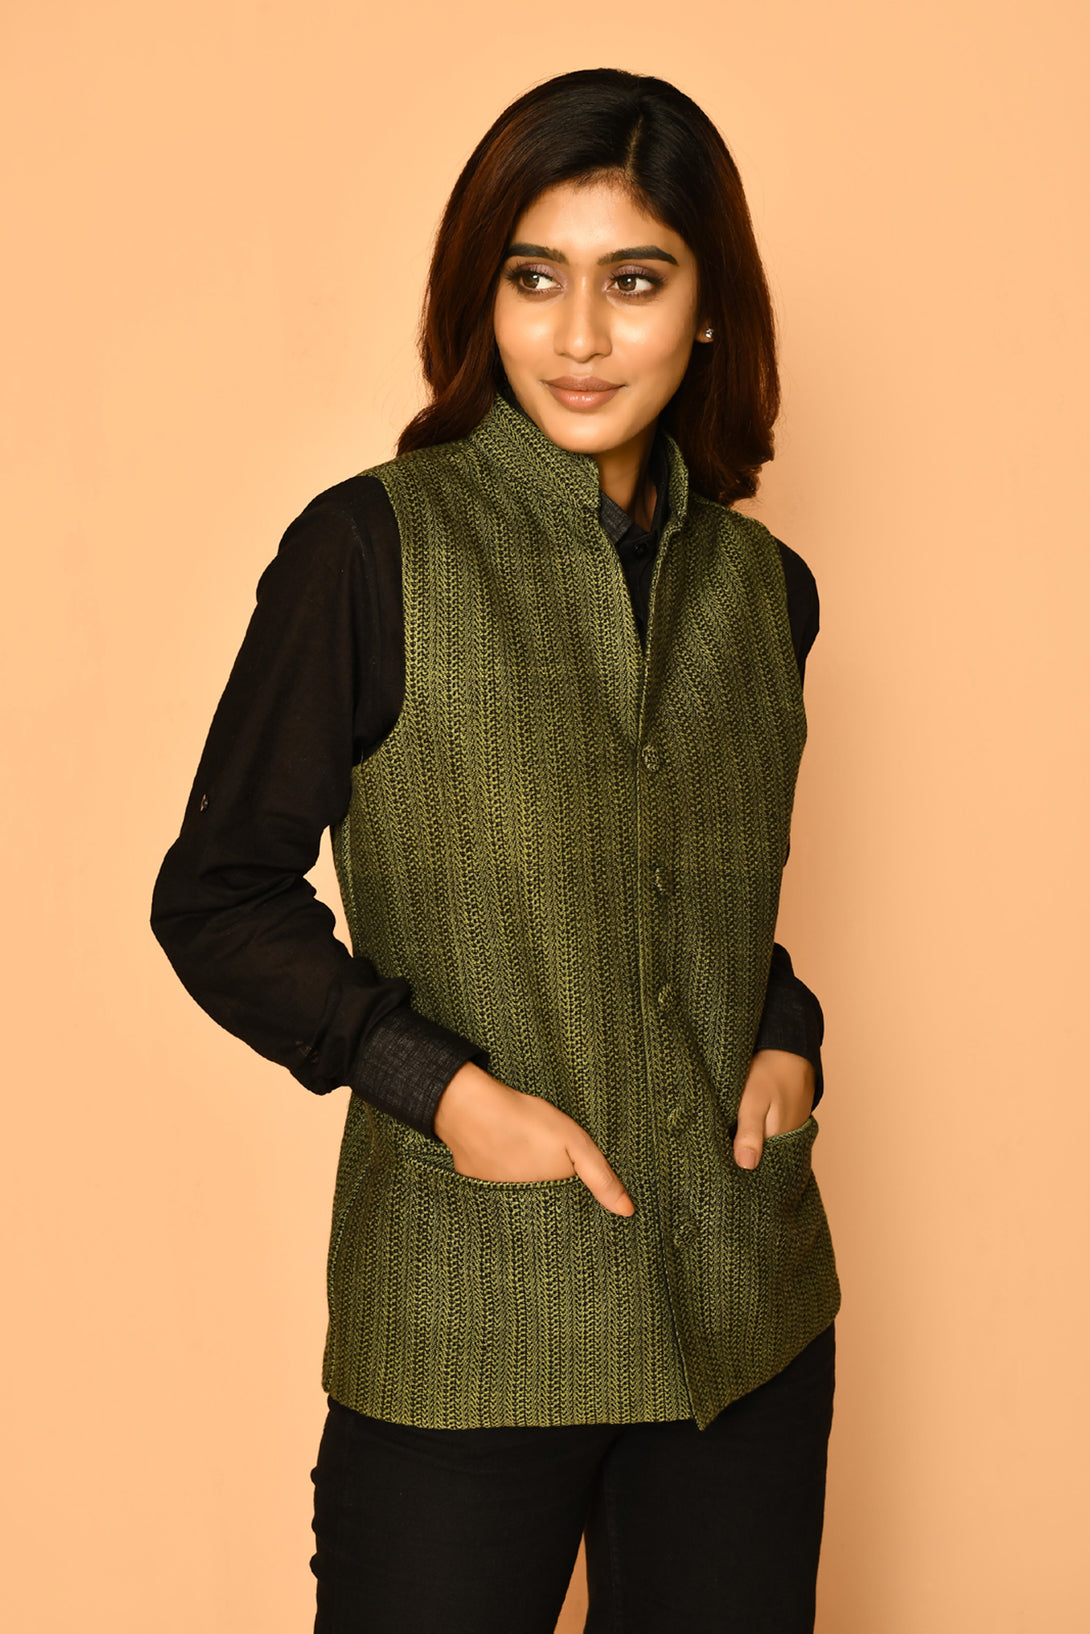 Handloom cotton Nehru jacket for women's corporate wear